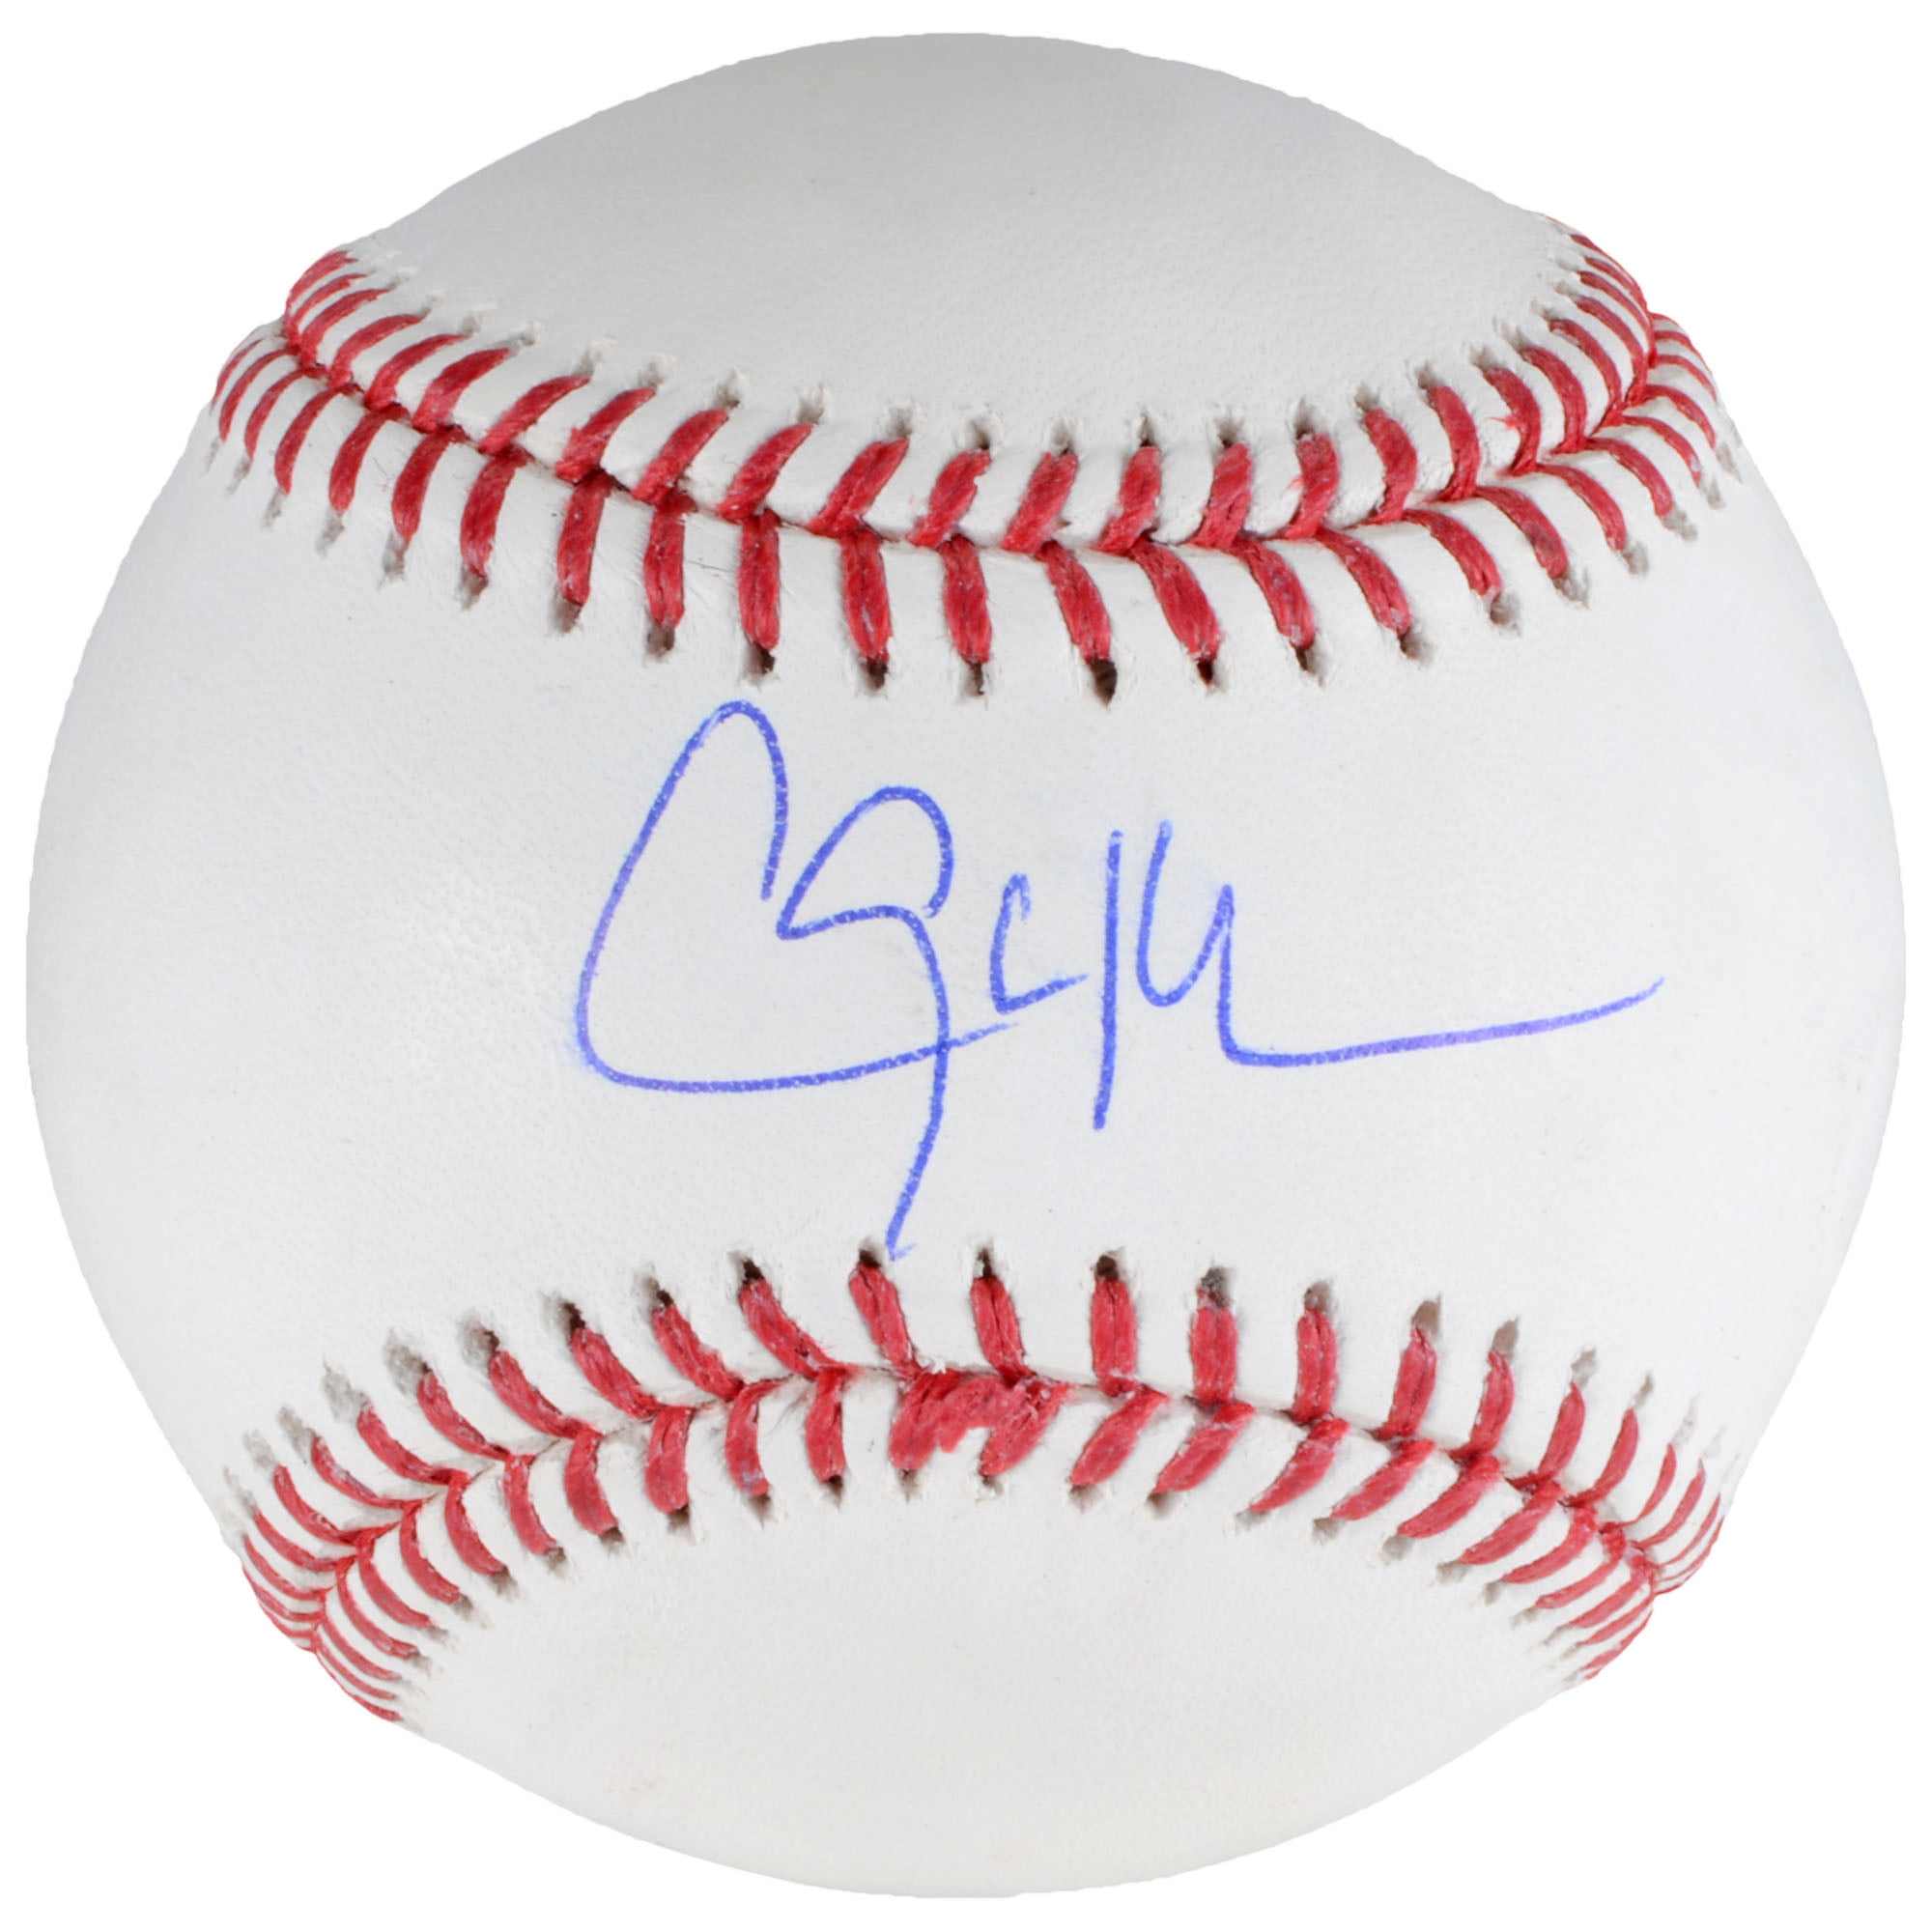 clayton kershaw autographed baseball